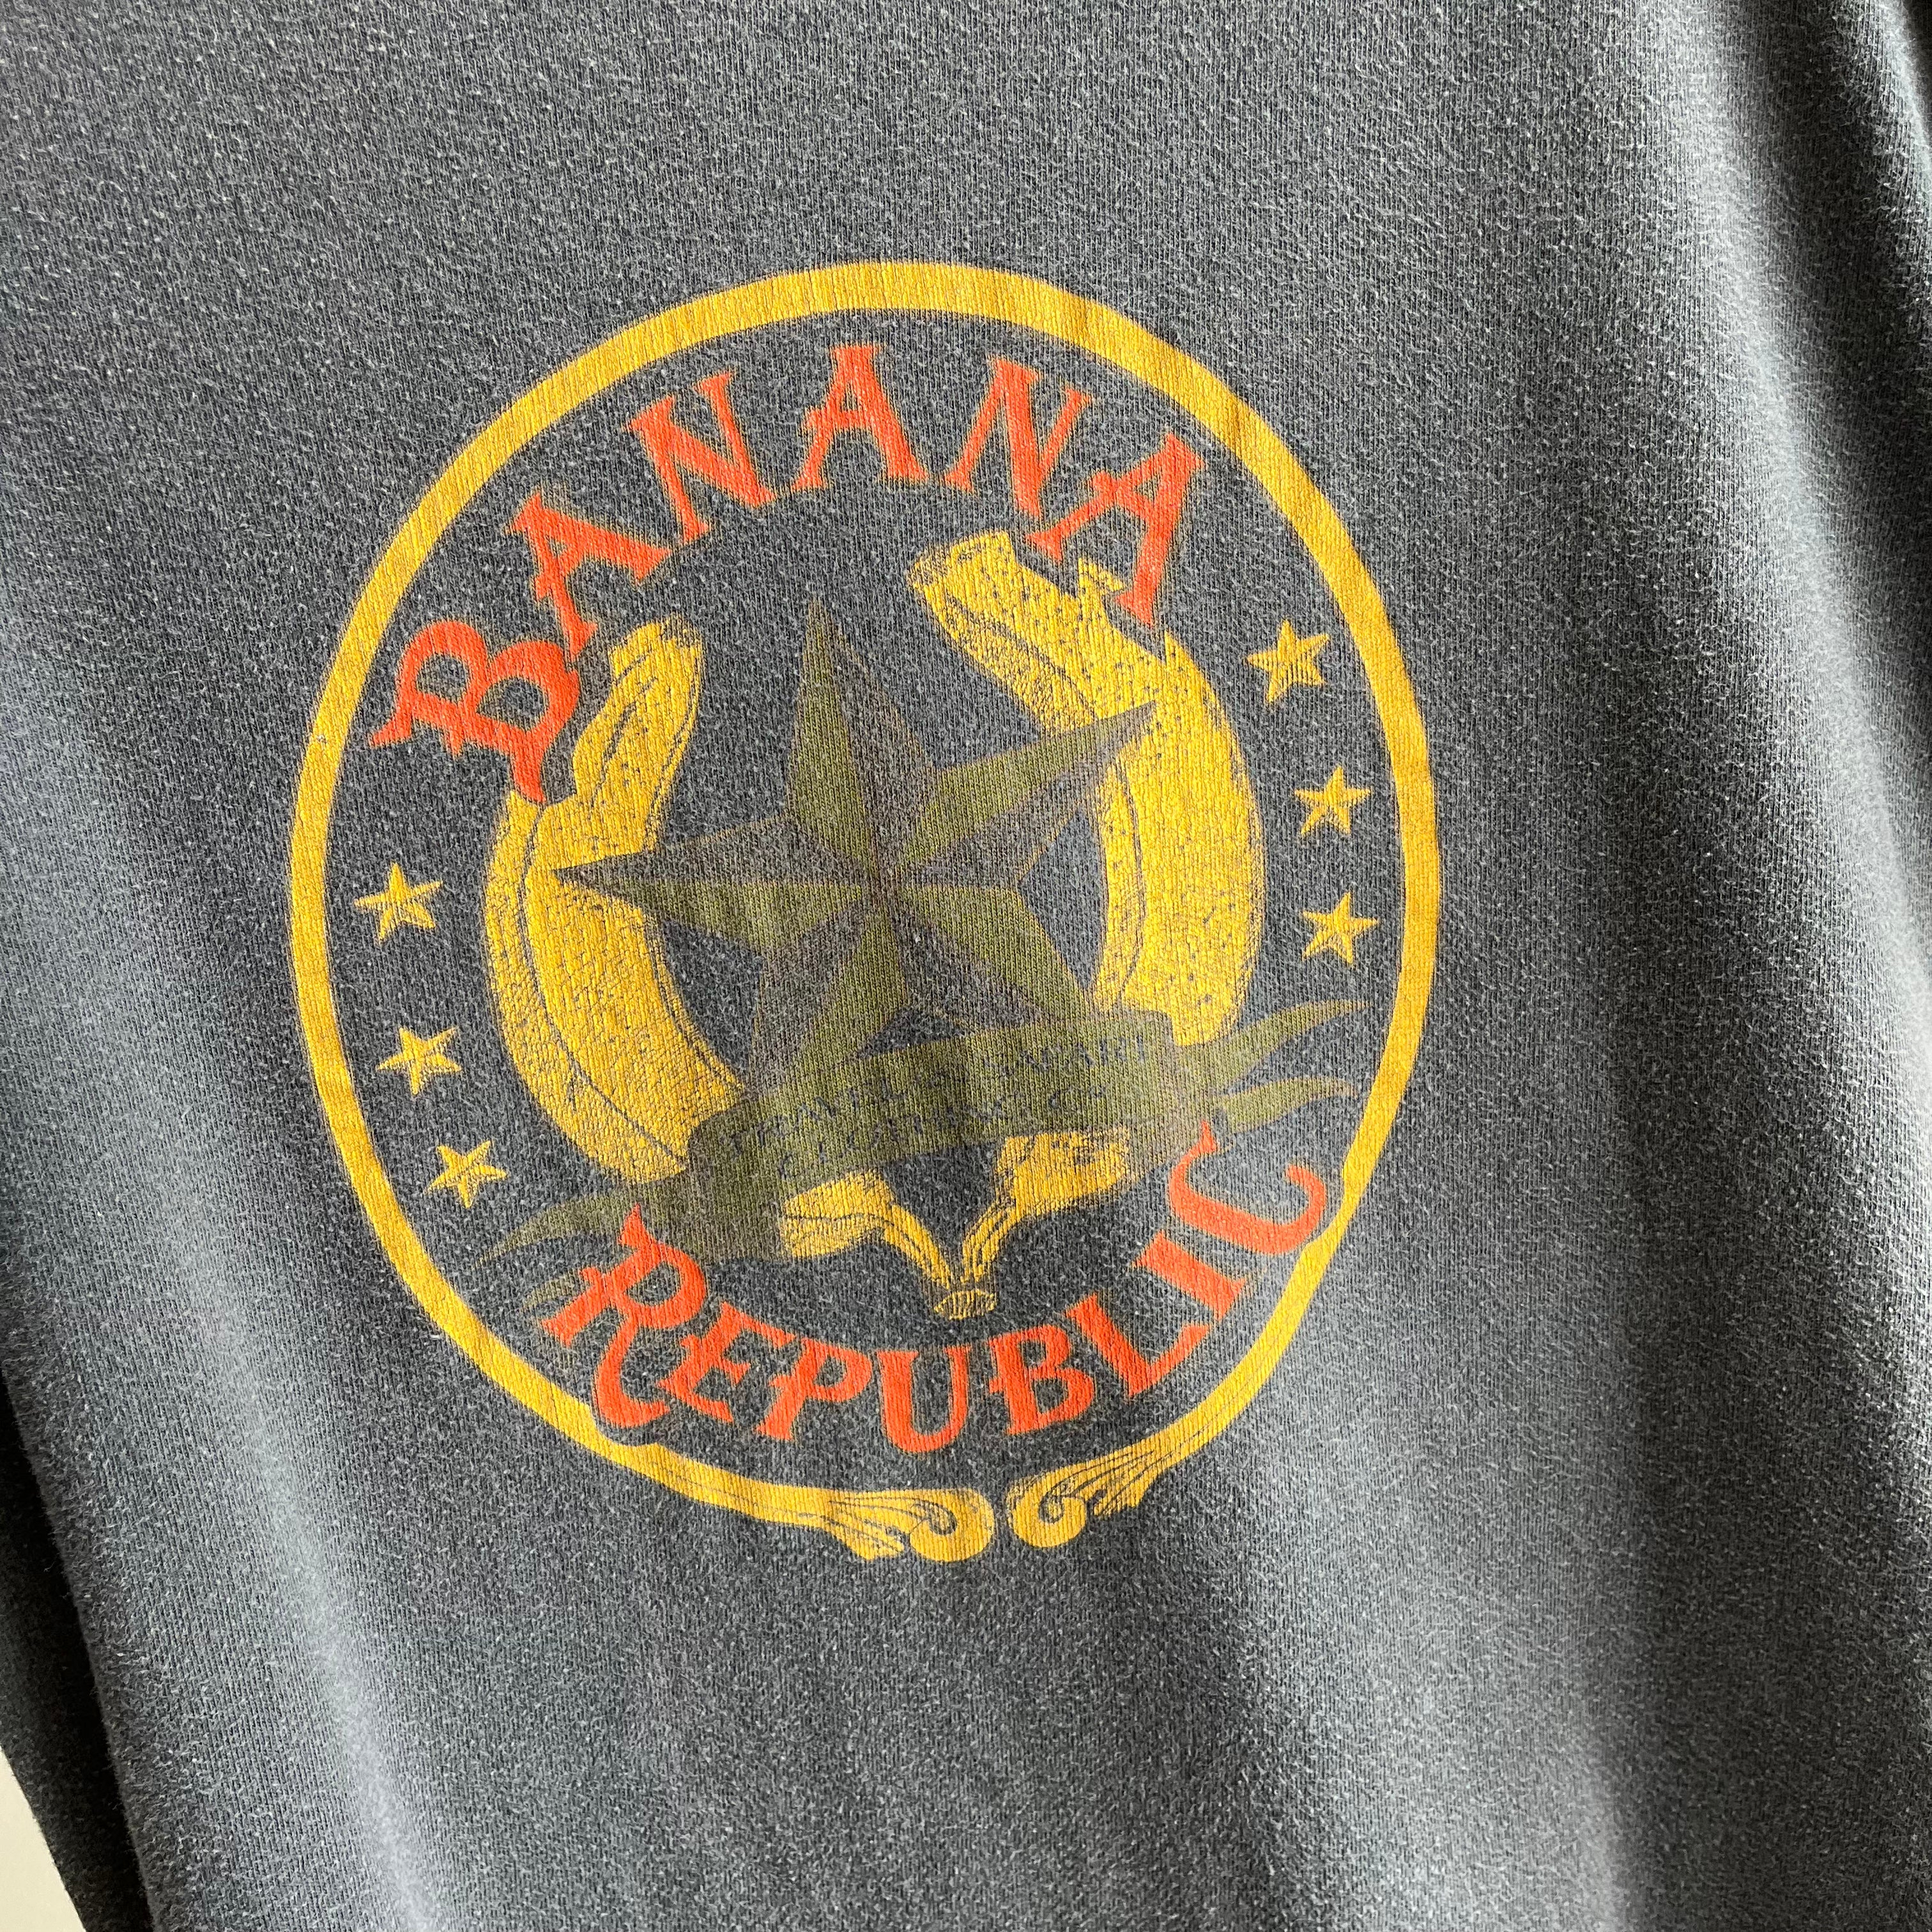 Pre 1983 OG USA Made Banana Republic Travel & Safari Clothing Company T-Shirt